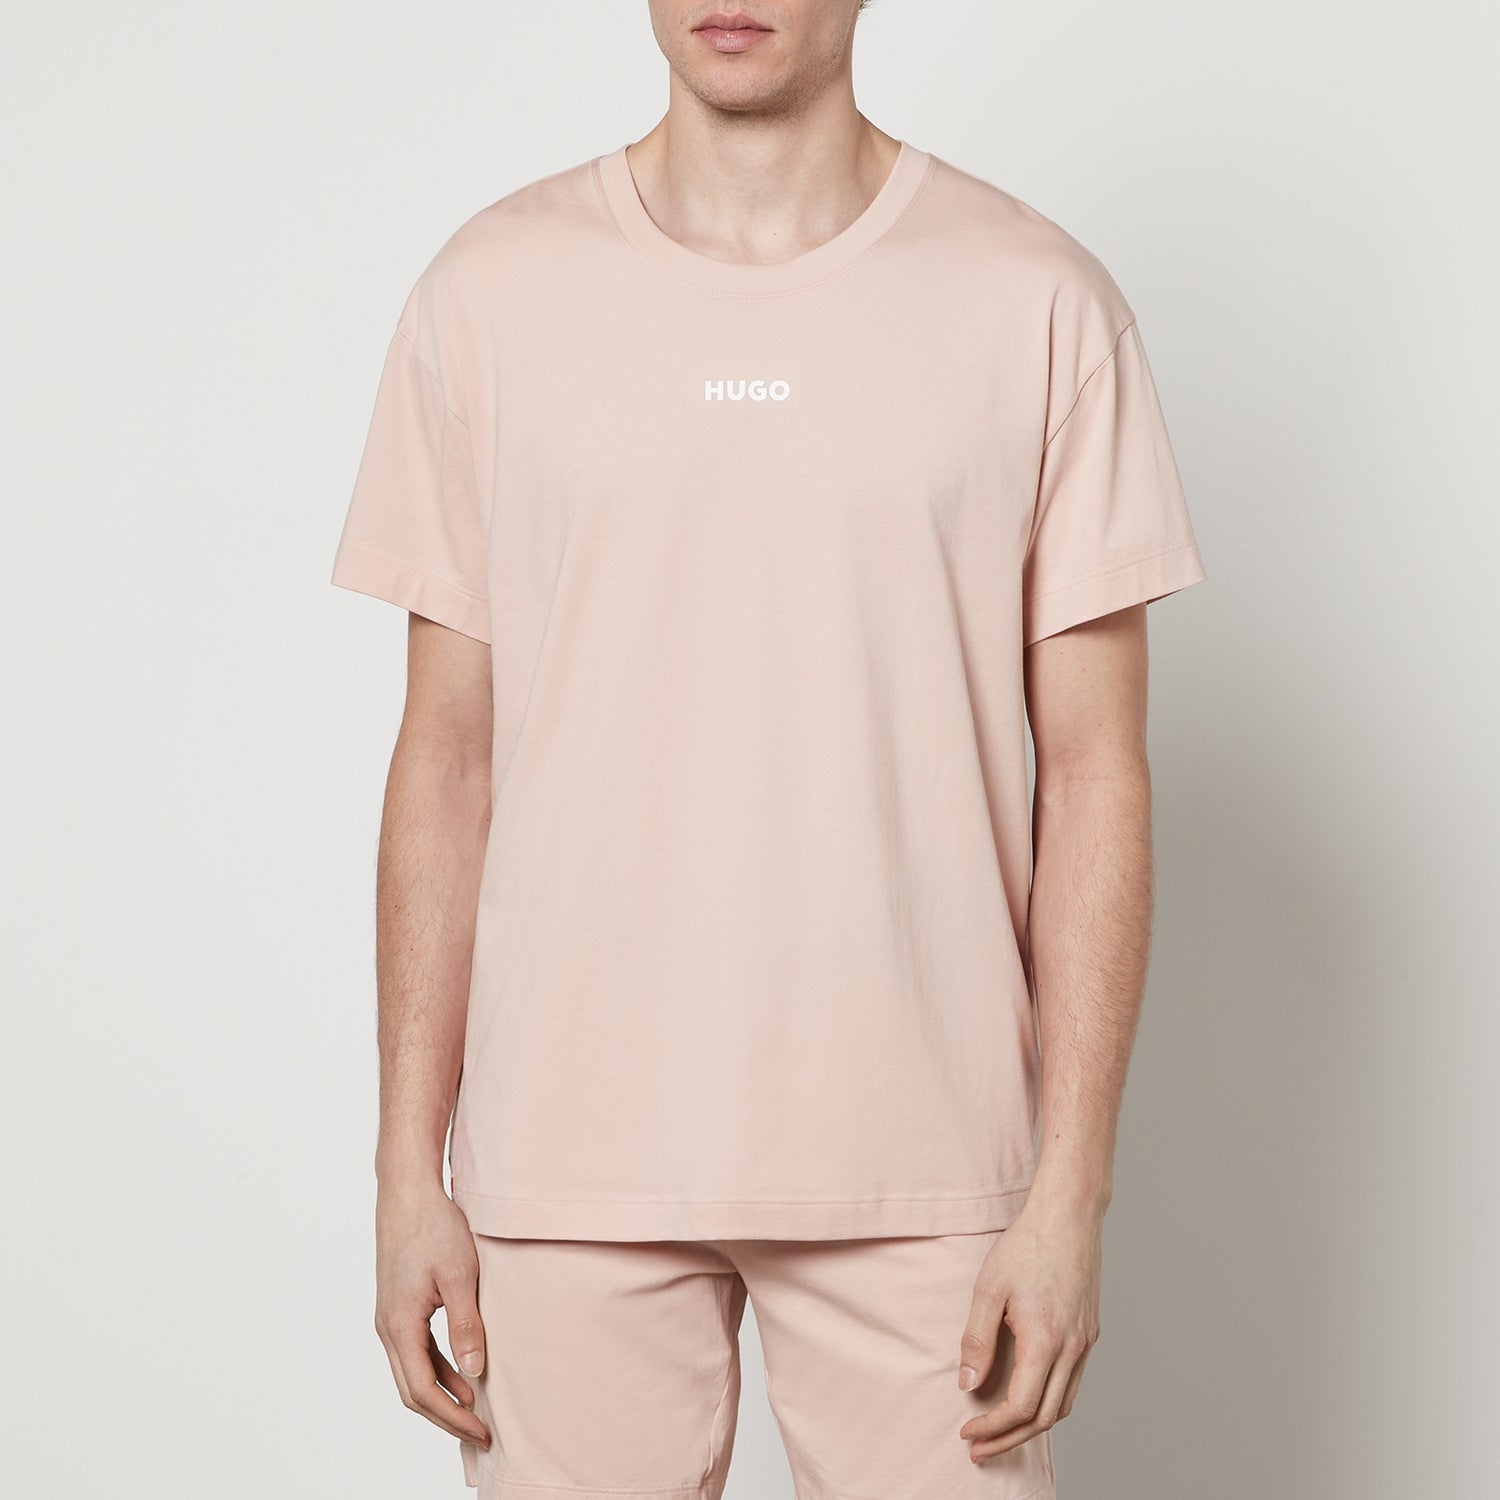 HUGO Bodywear Linked Stretch Cotton-Jersey T-Shirt - S